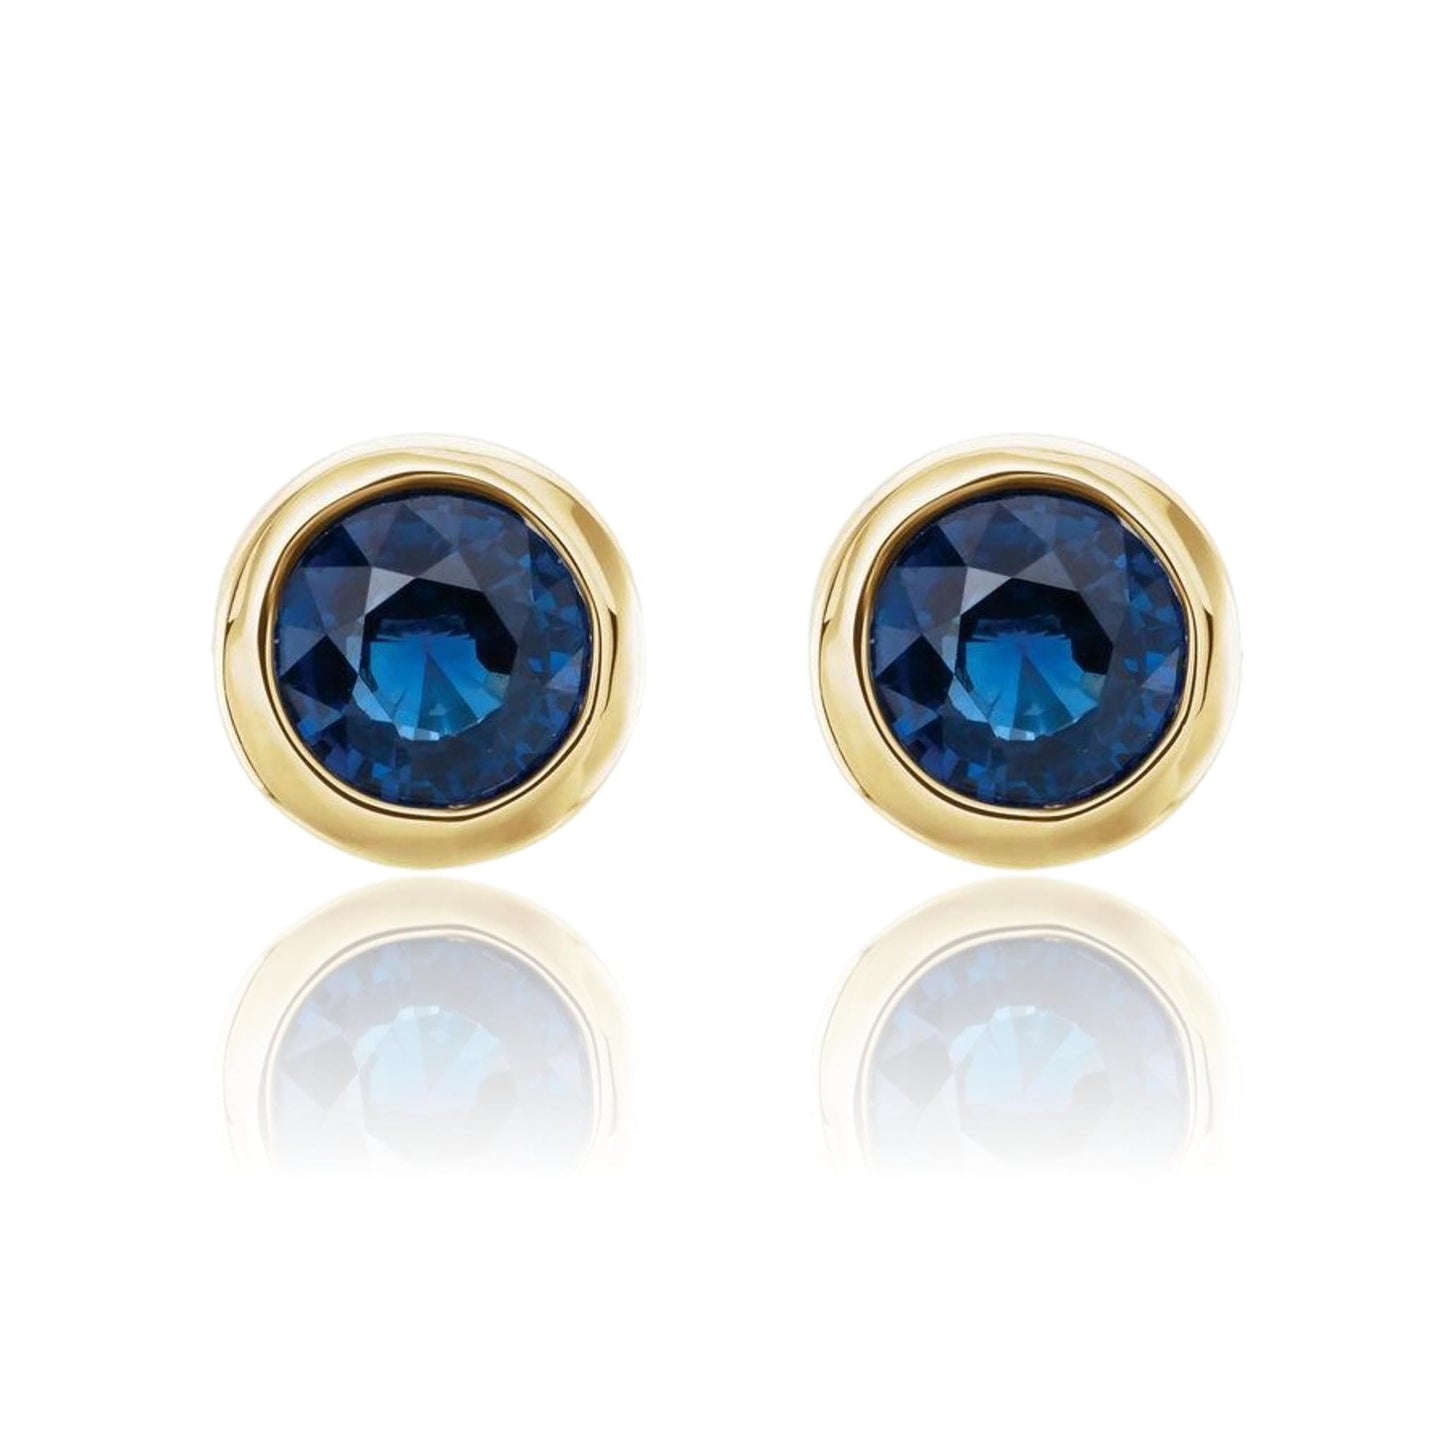 Simple Blue Sapphire Bezel Set Stud Earrings 14k Yellow Gold / 4mm Lab Created Sapphires Earrings by Nodeform